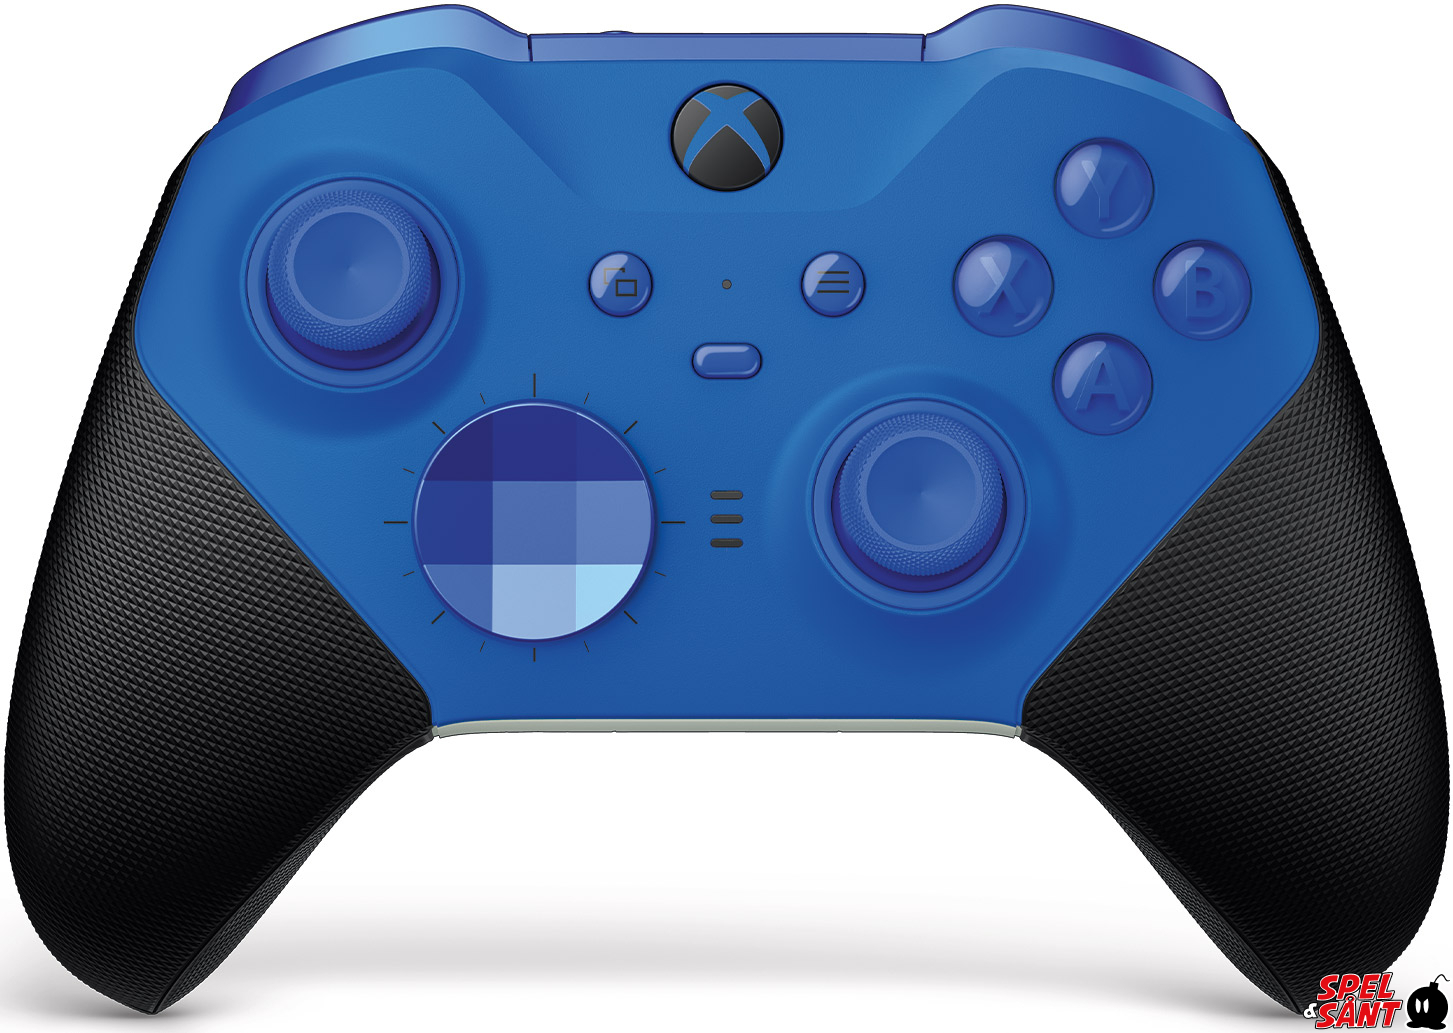 Microsoft Xbox Elite Wireless Controller Series 2 – Core (Blue)